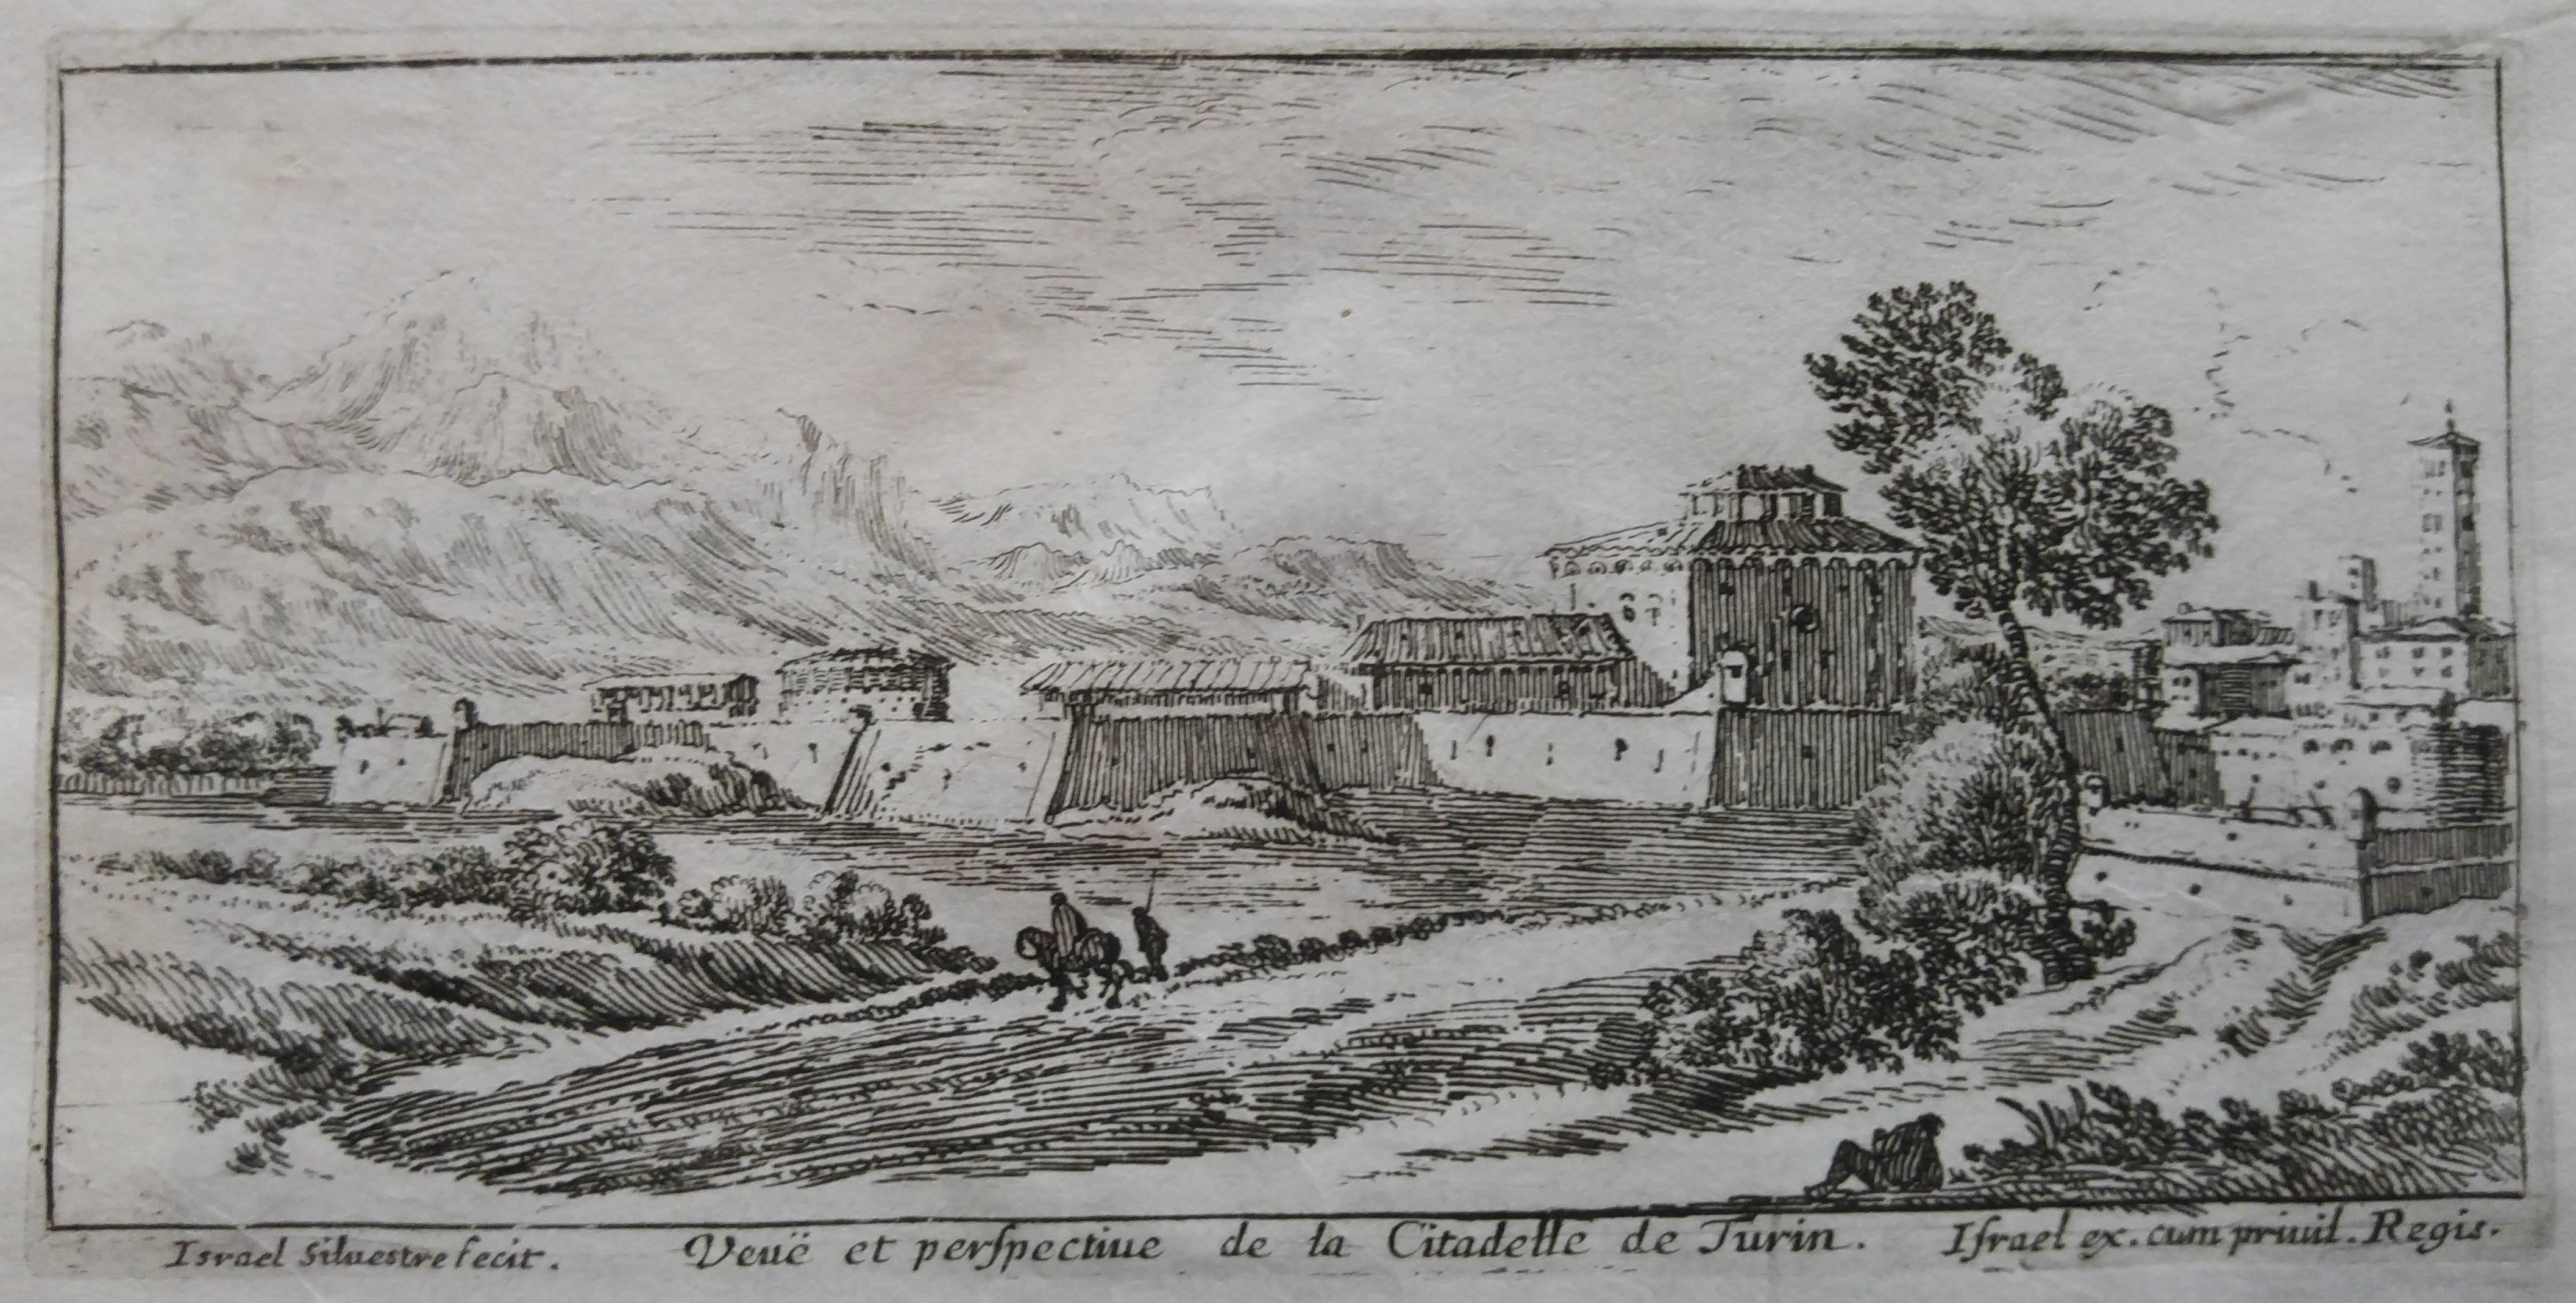 Israël Silvestre : Veuë et perspectiue de la Citadelle de Turin.